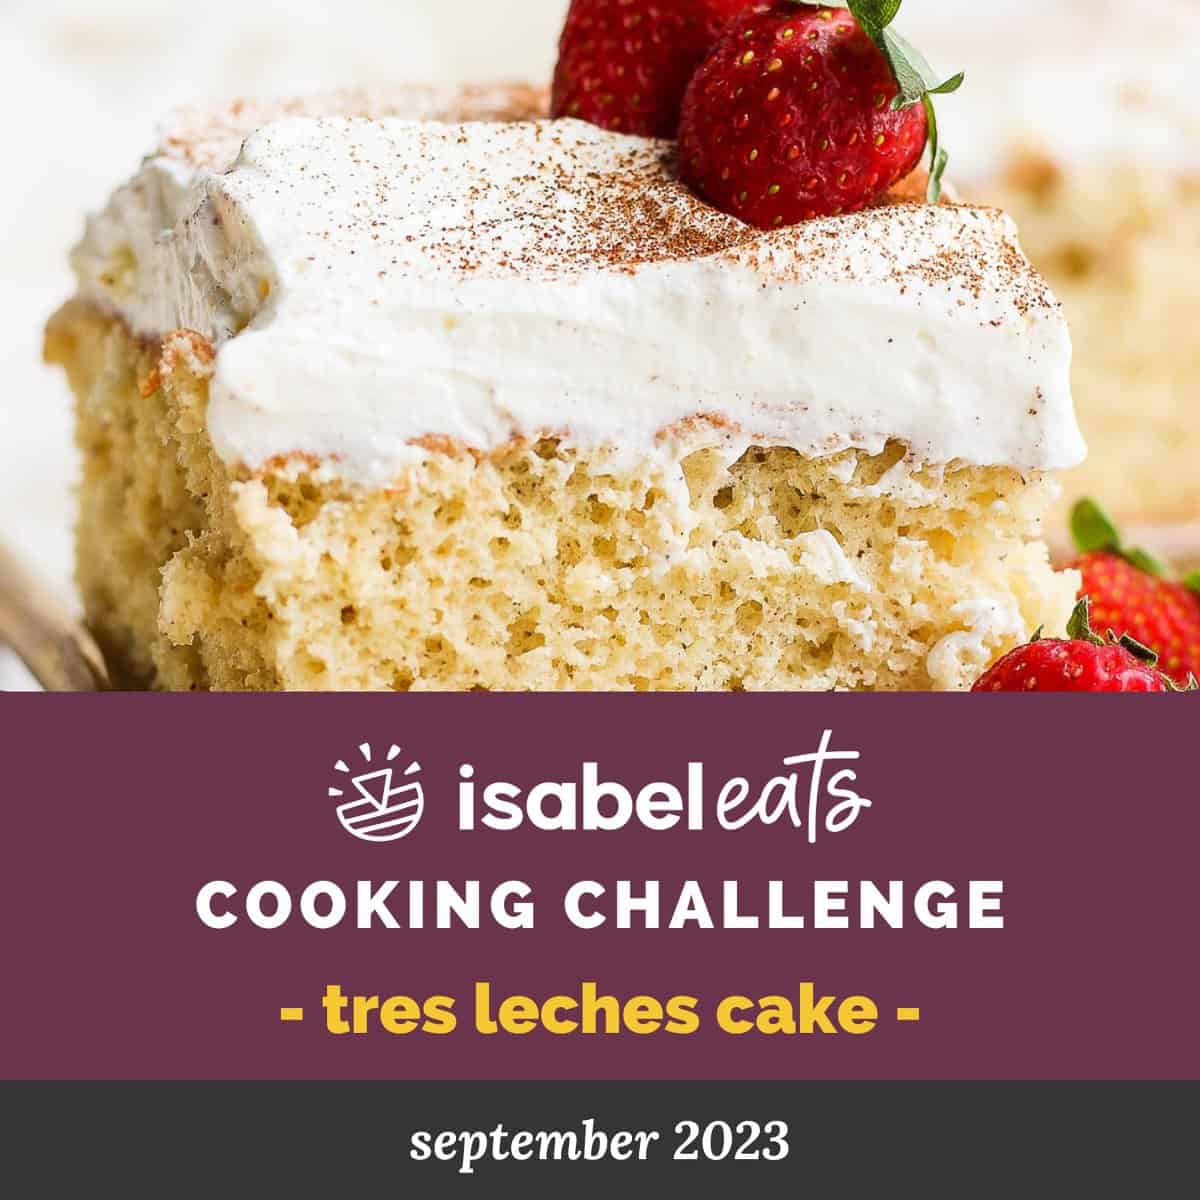 September 2023 Cooking Challenge